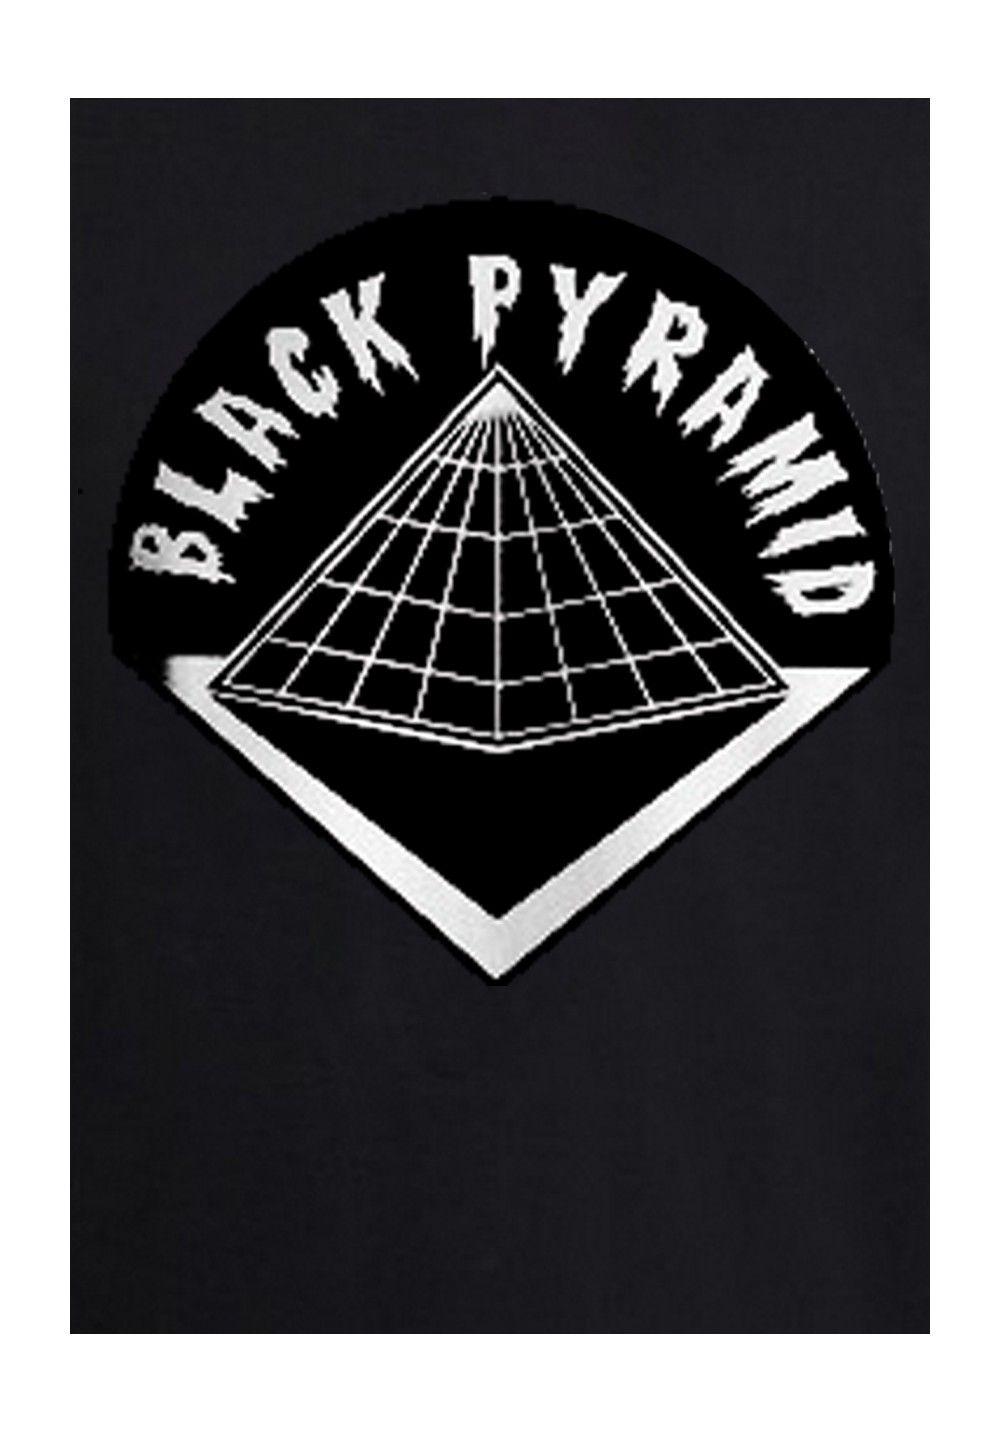 Black Triangle Pyramid Logo - Black pyramid Logos